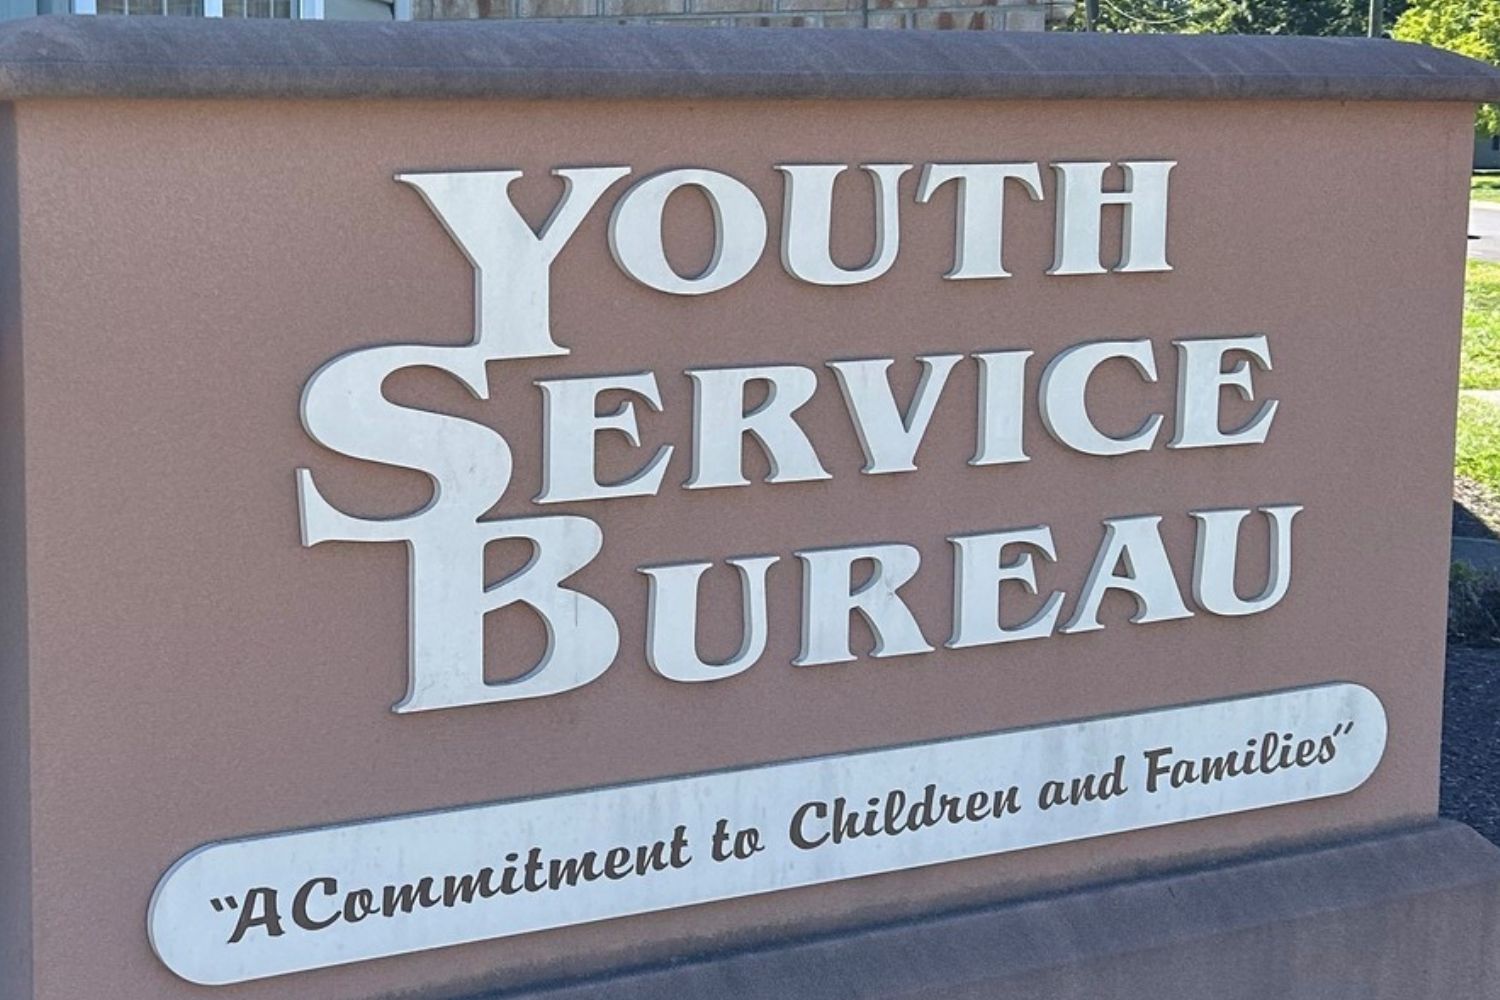 Youth Services Bureau